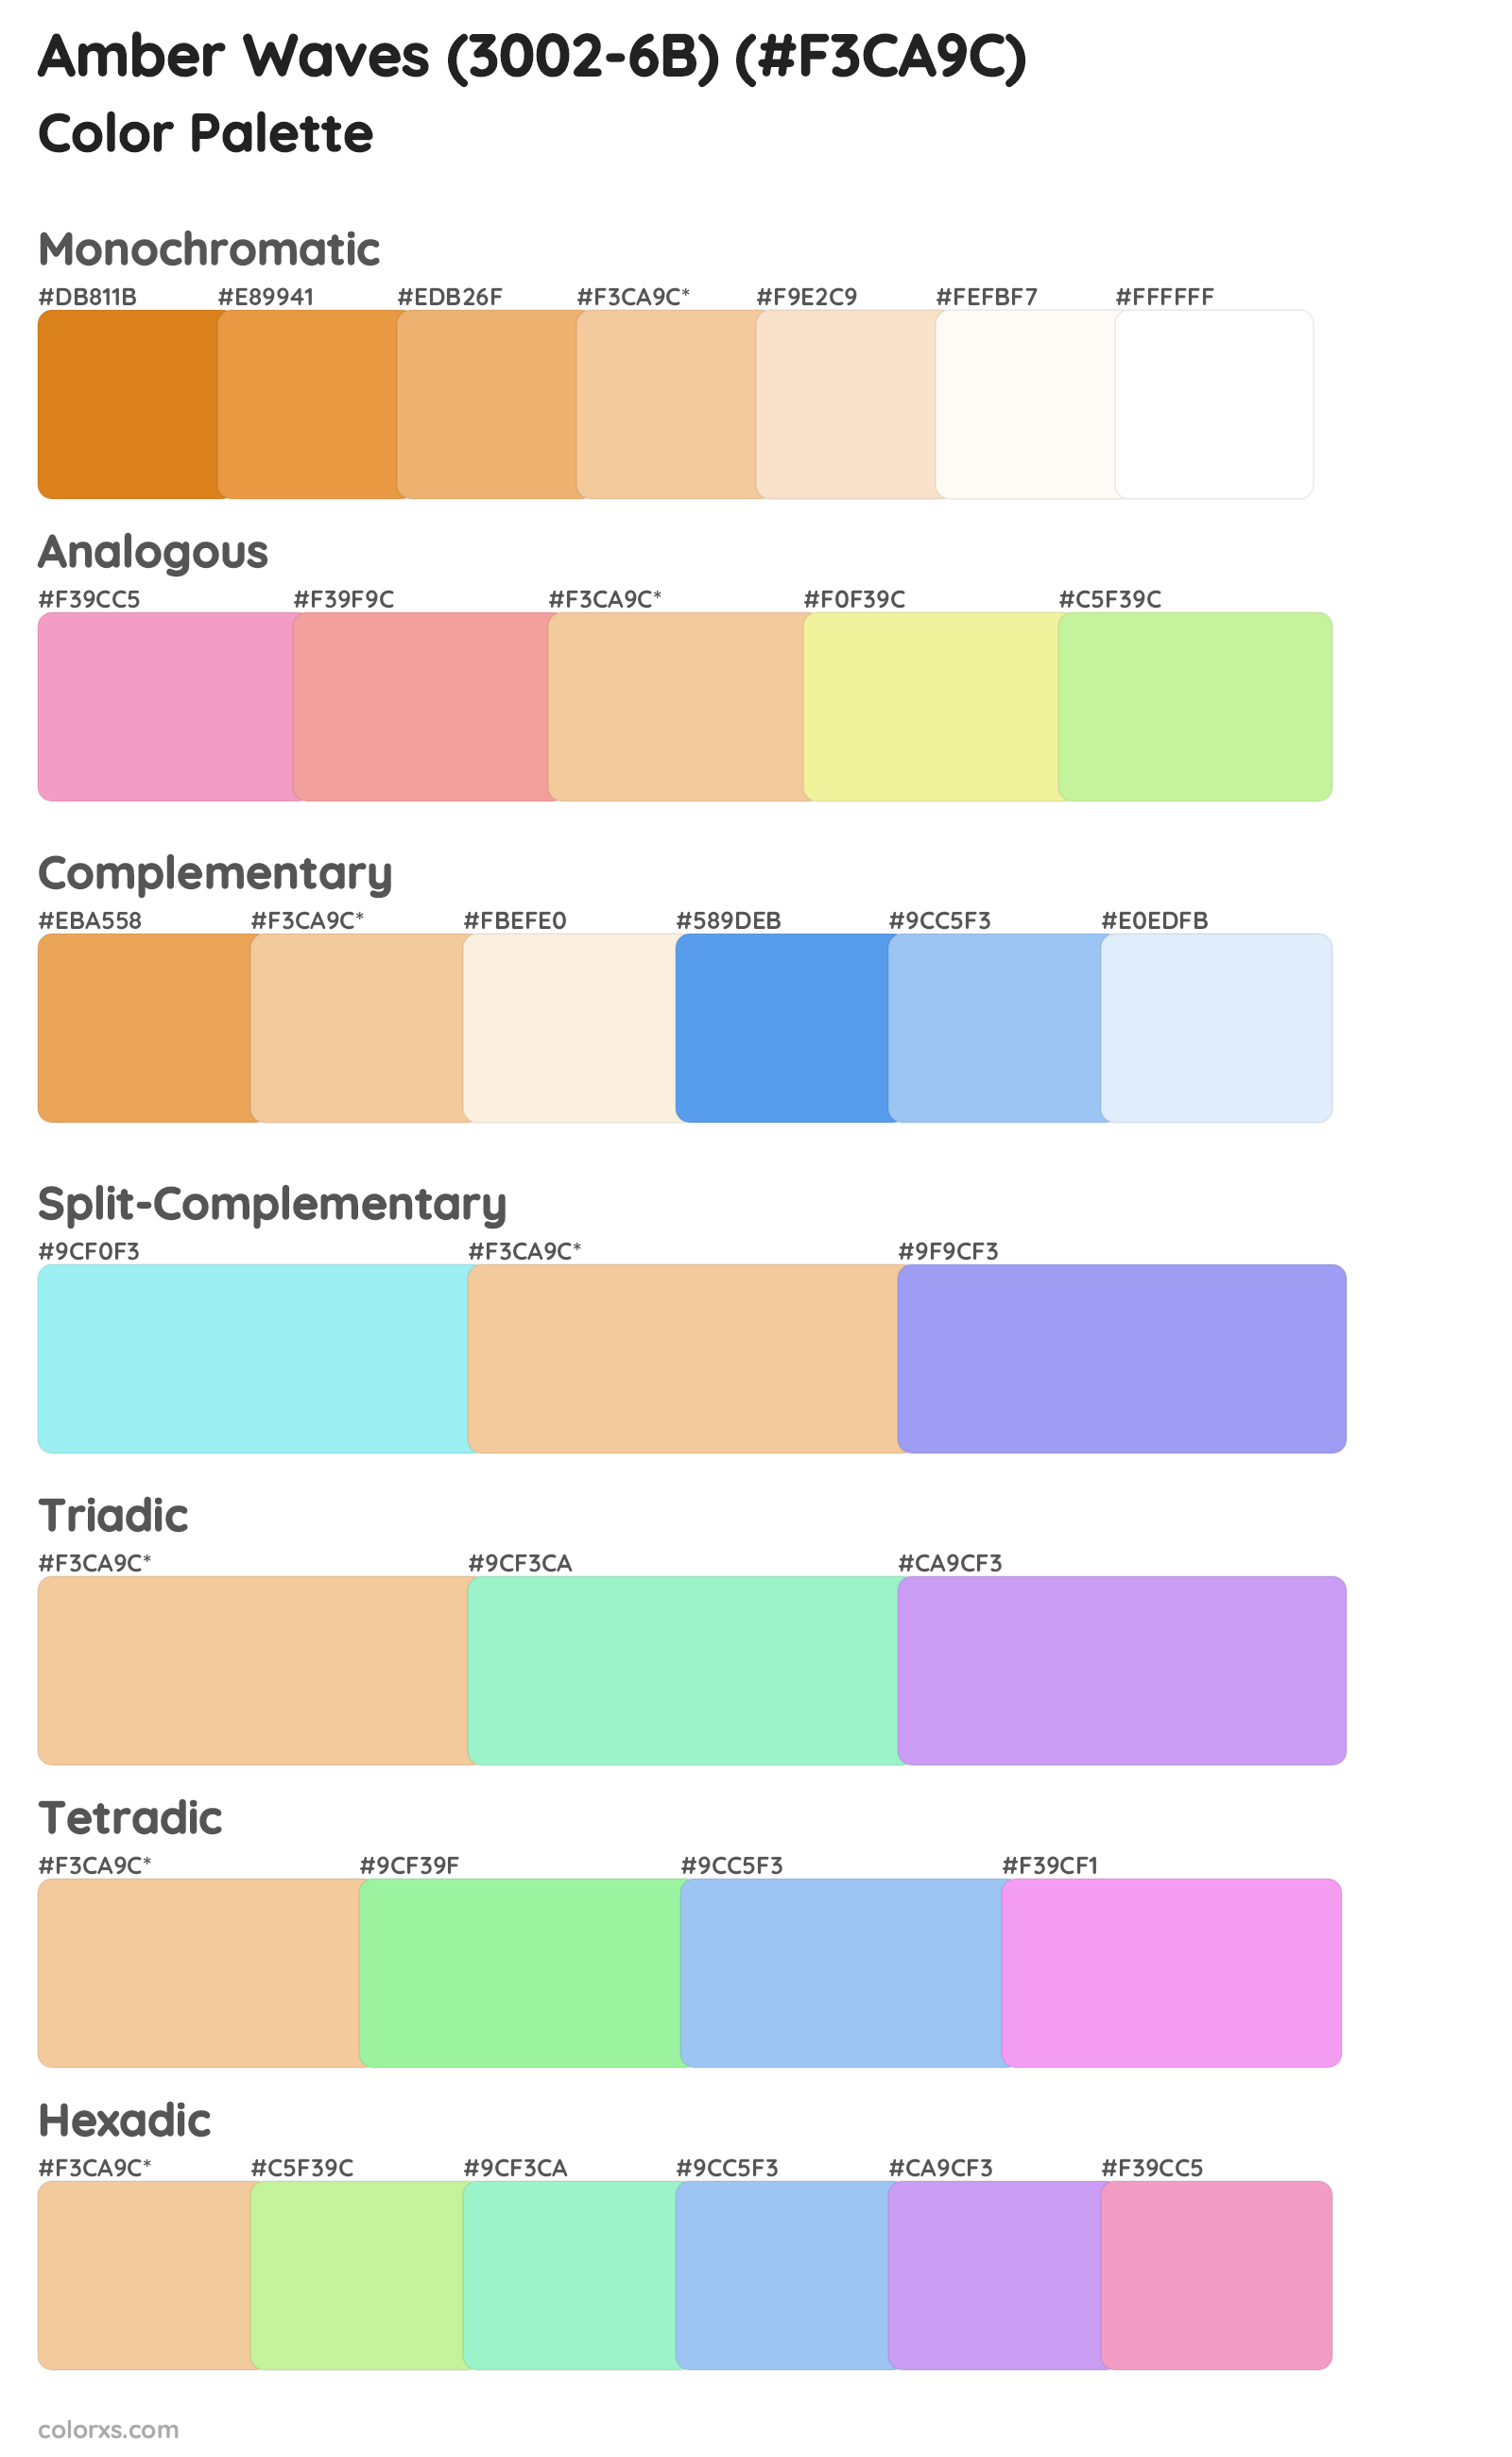 Amber Waves (3002-6B) Color Scheme Palettes